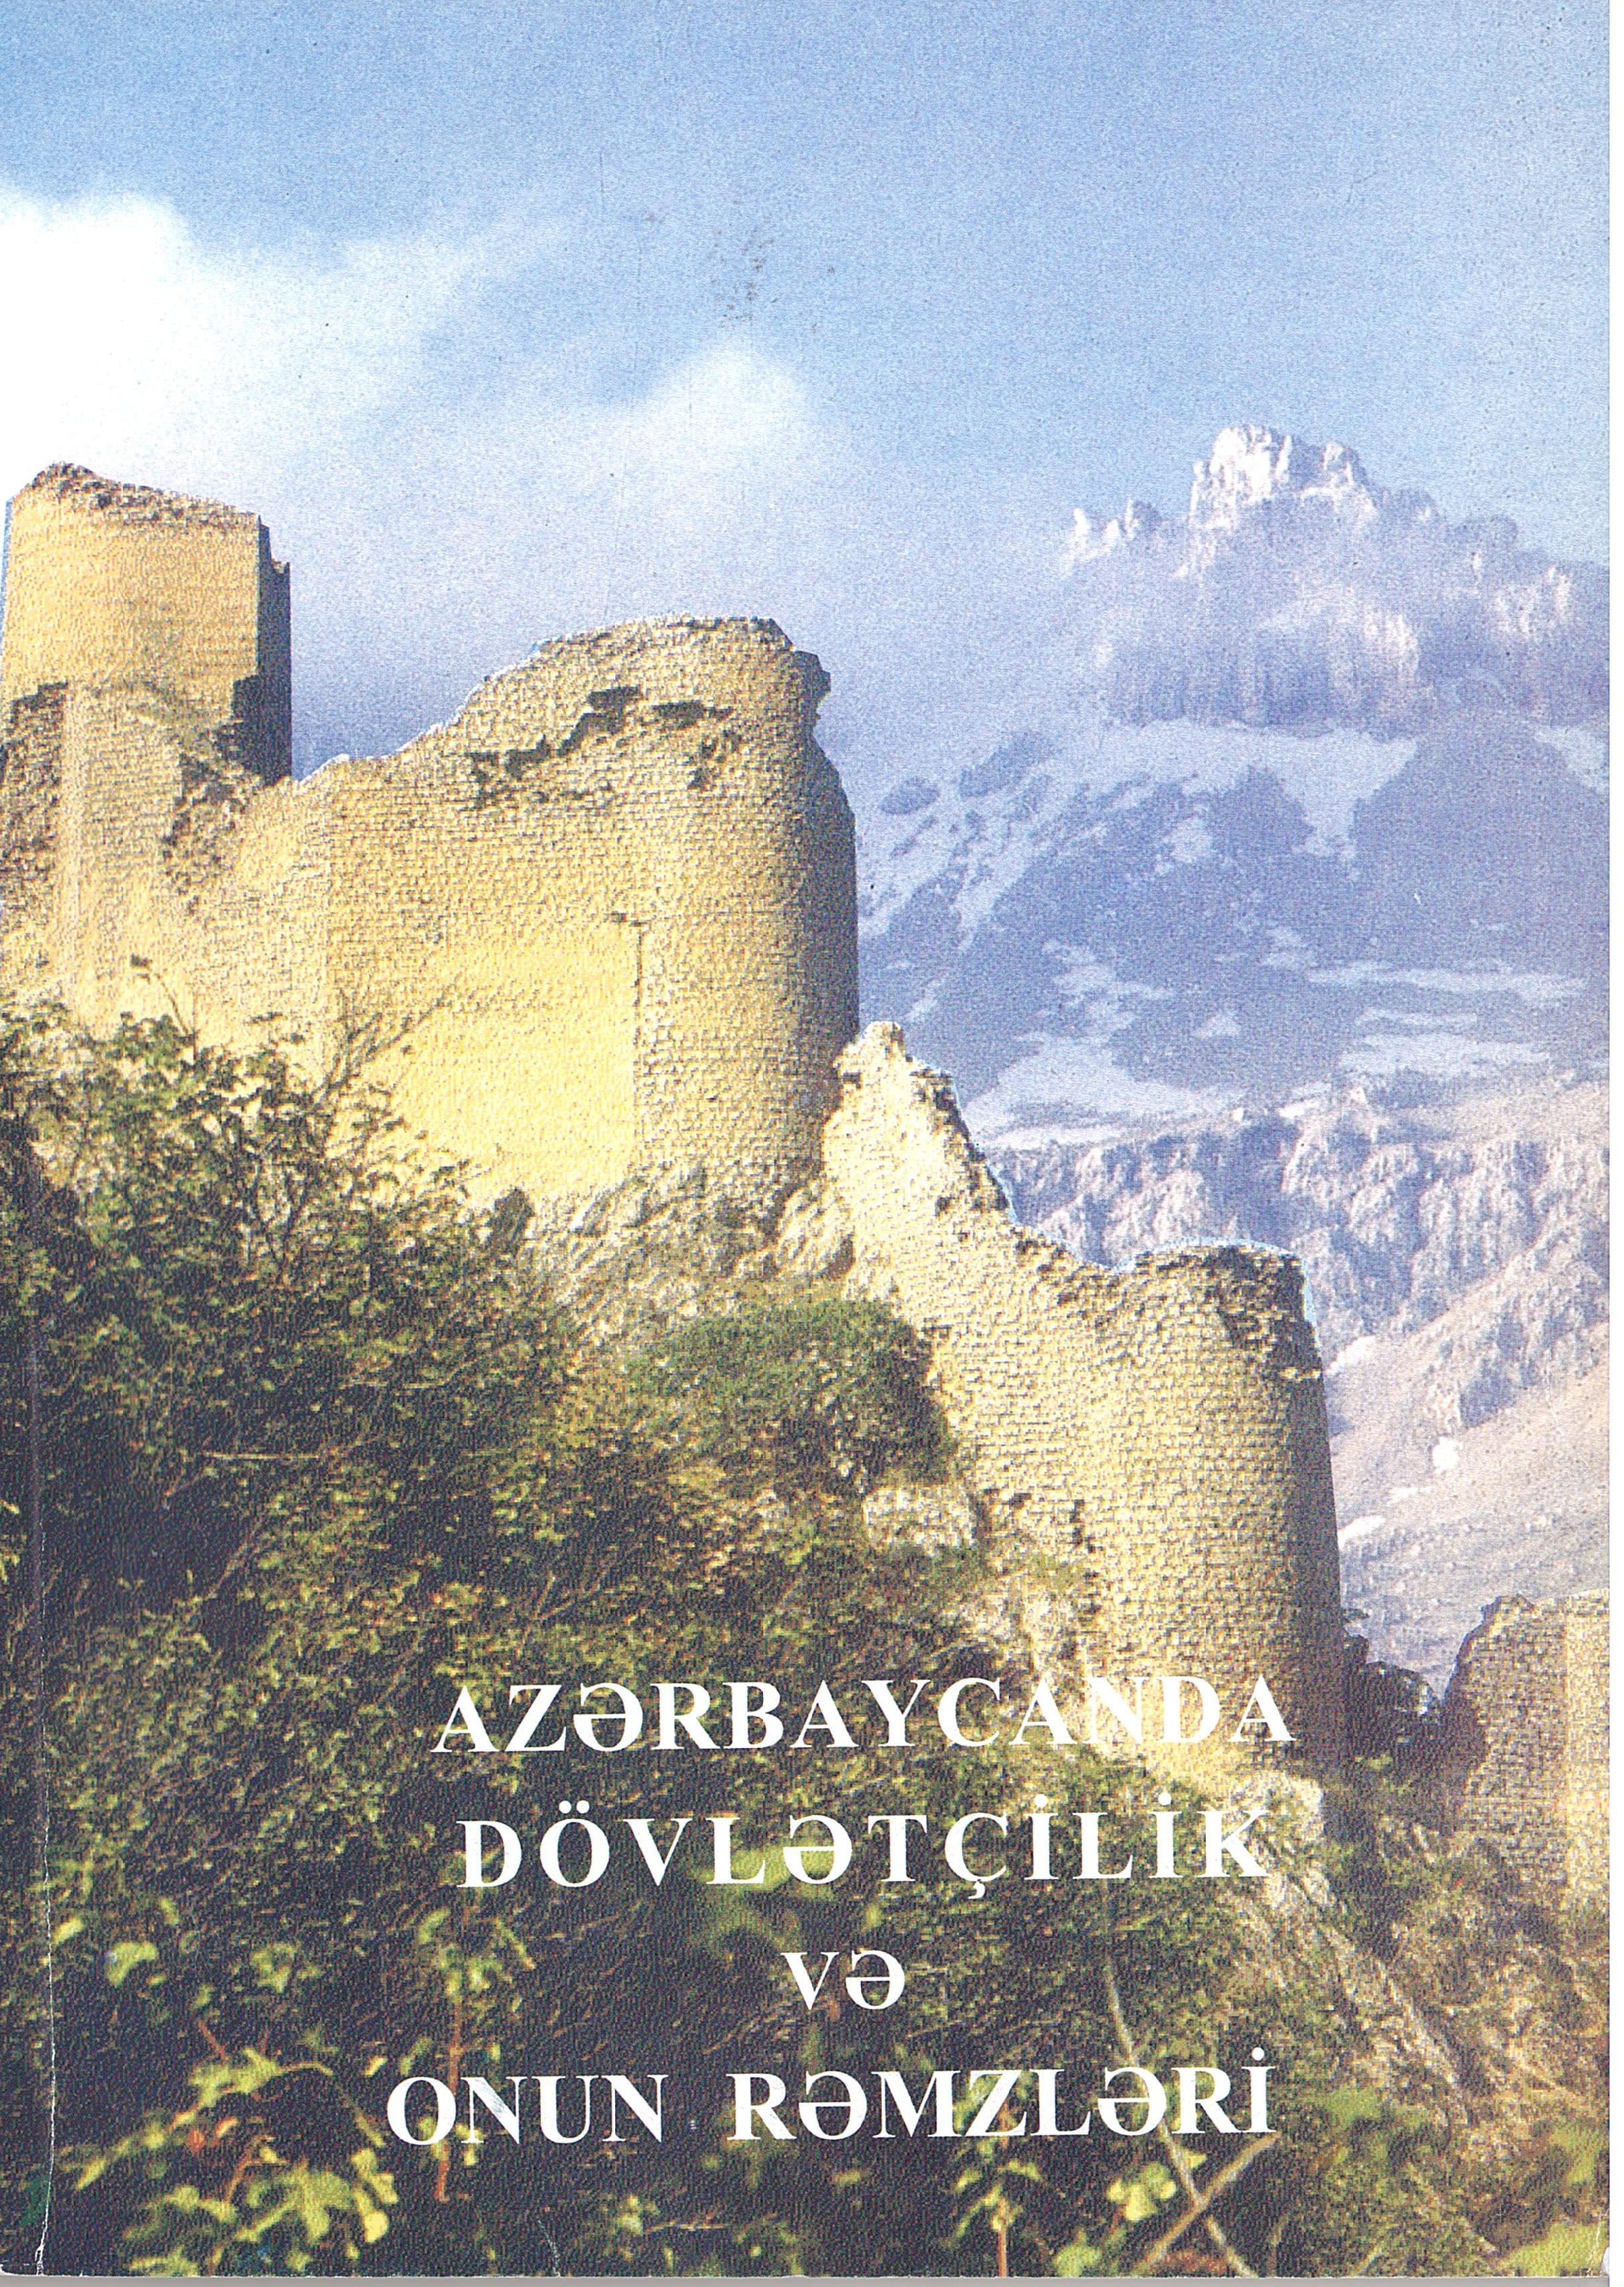  Statehood and state symbols in Azerbaijan